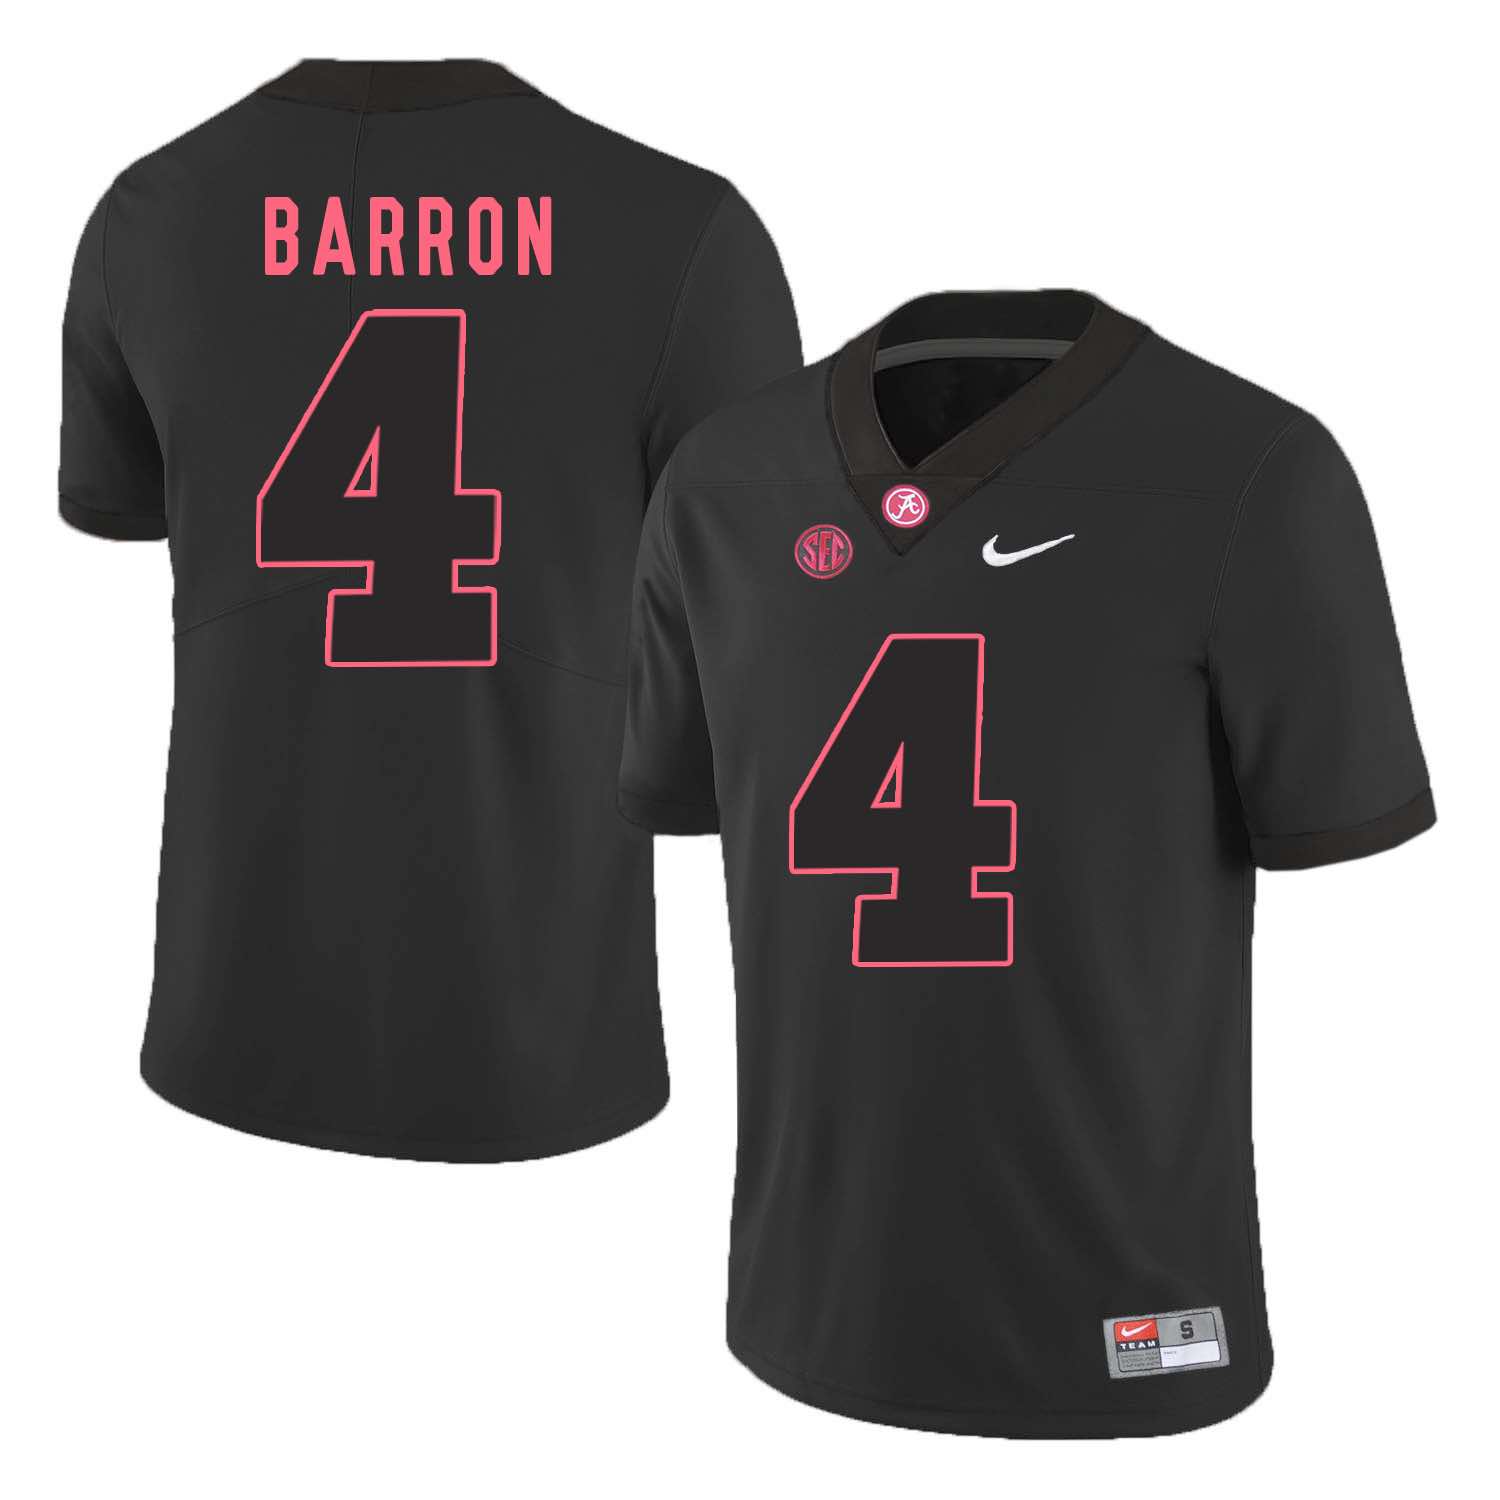 NCAA Alabama Crimson Tide #4 Barron Black Shawdow Football Jersey